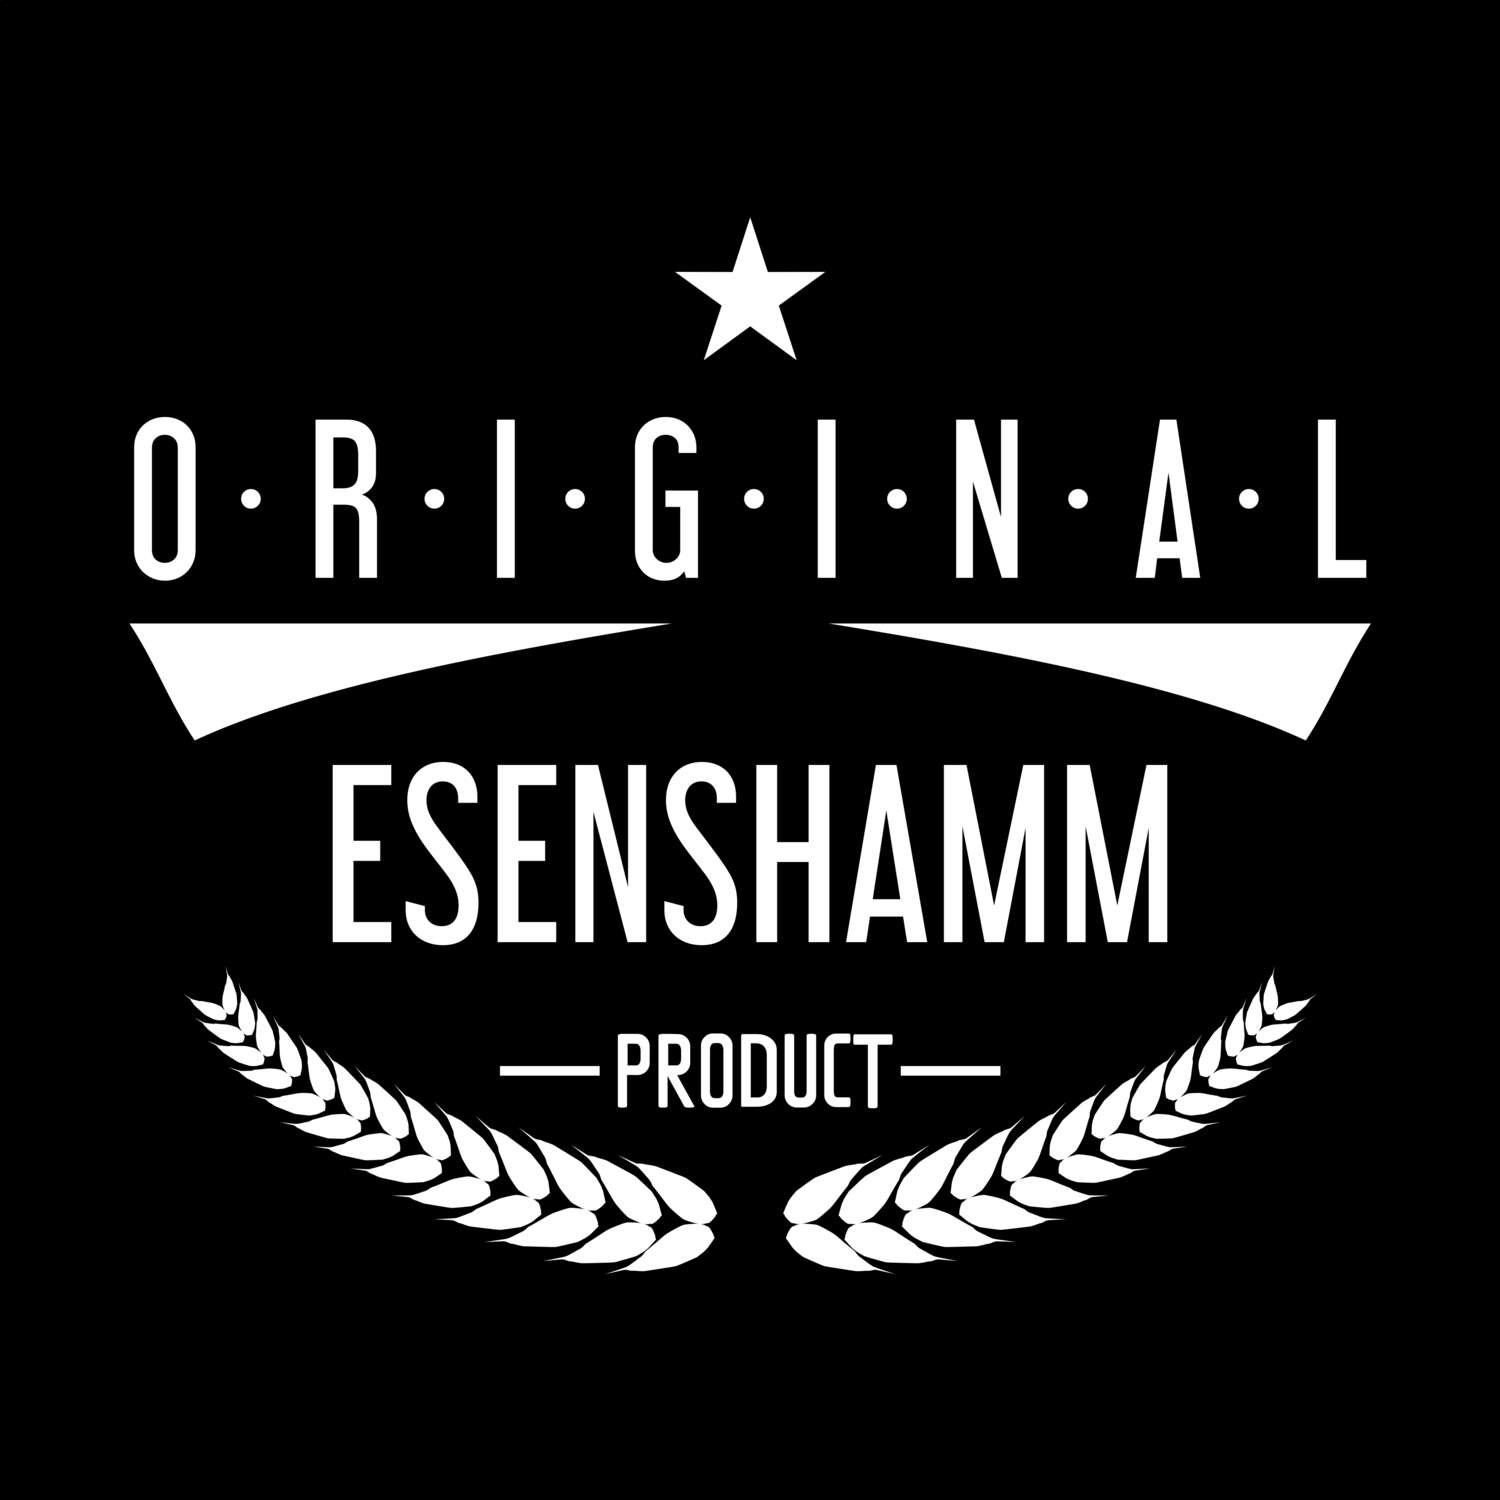 Esenshamm T-Shirt »Original Product«